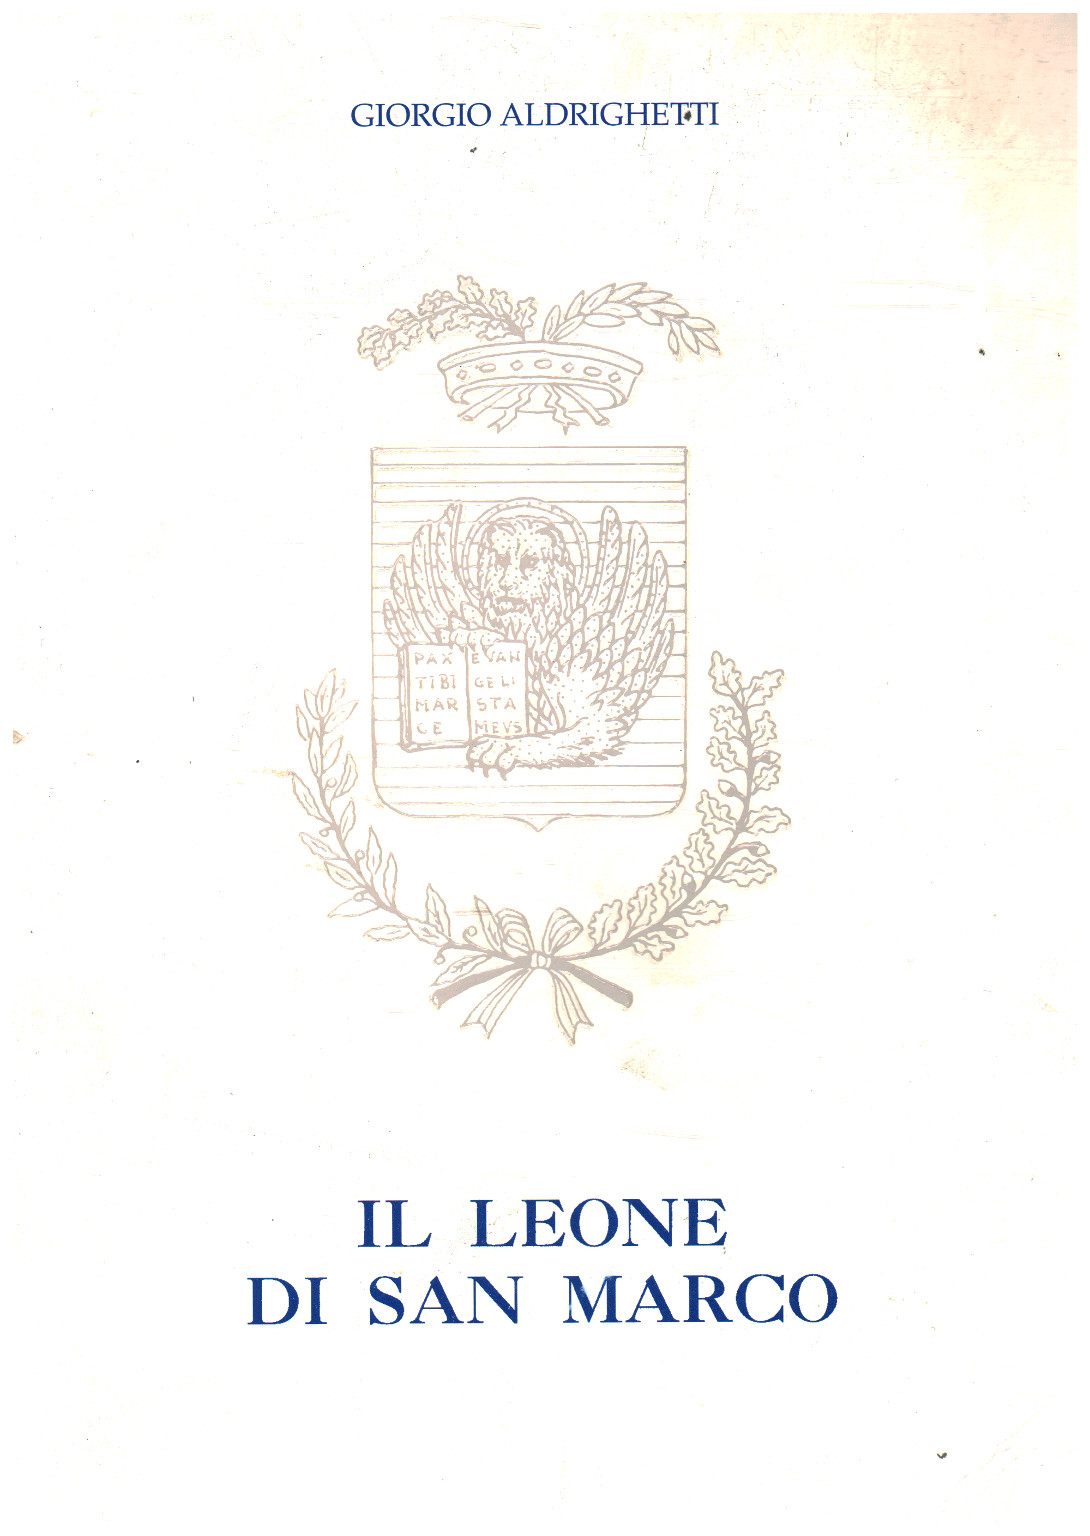 Der Löwe von San Marco, Giorgio Aldrighetti